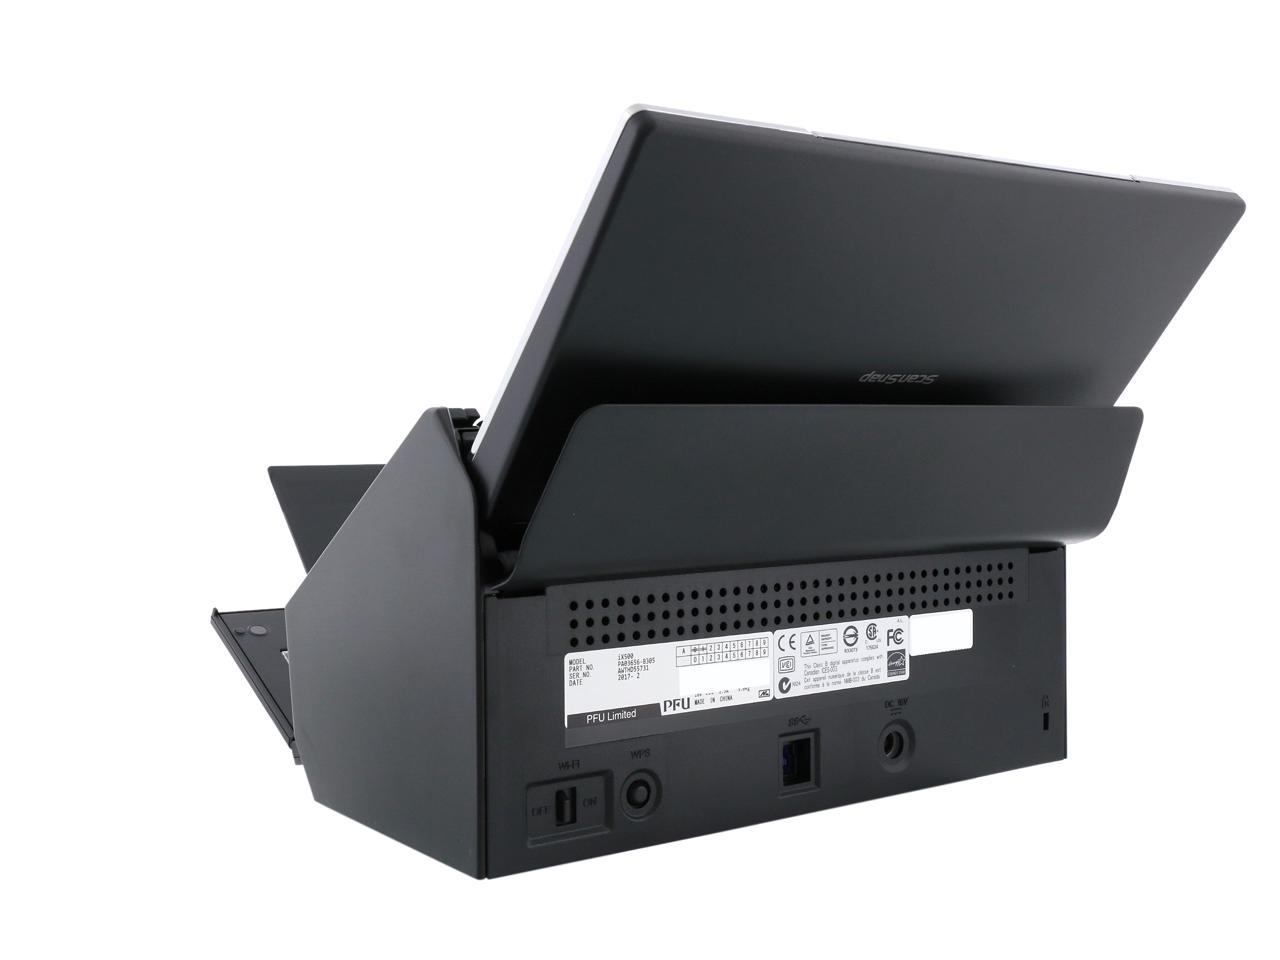 fujitsu scansnap ix500 color duplex desktop scanner